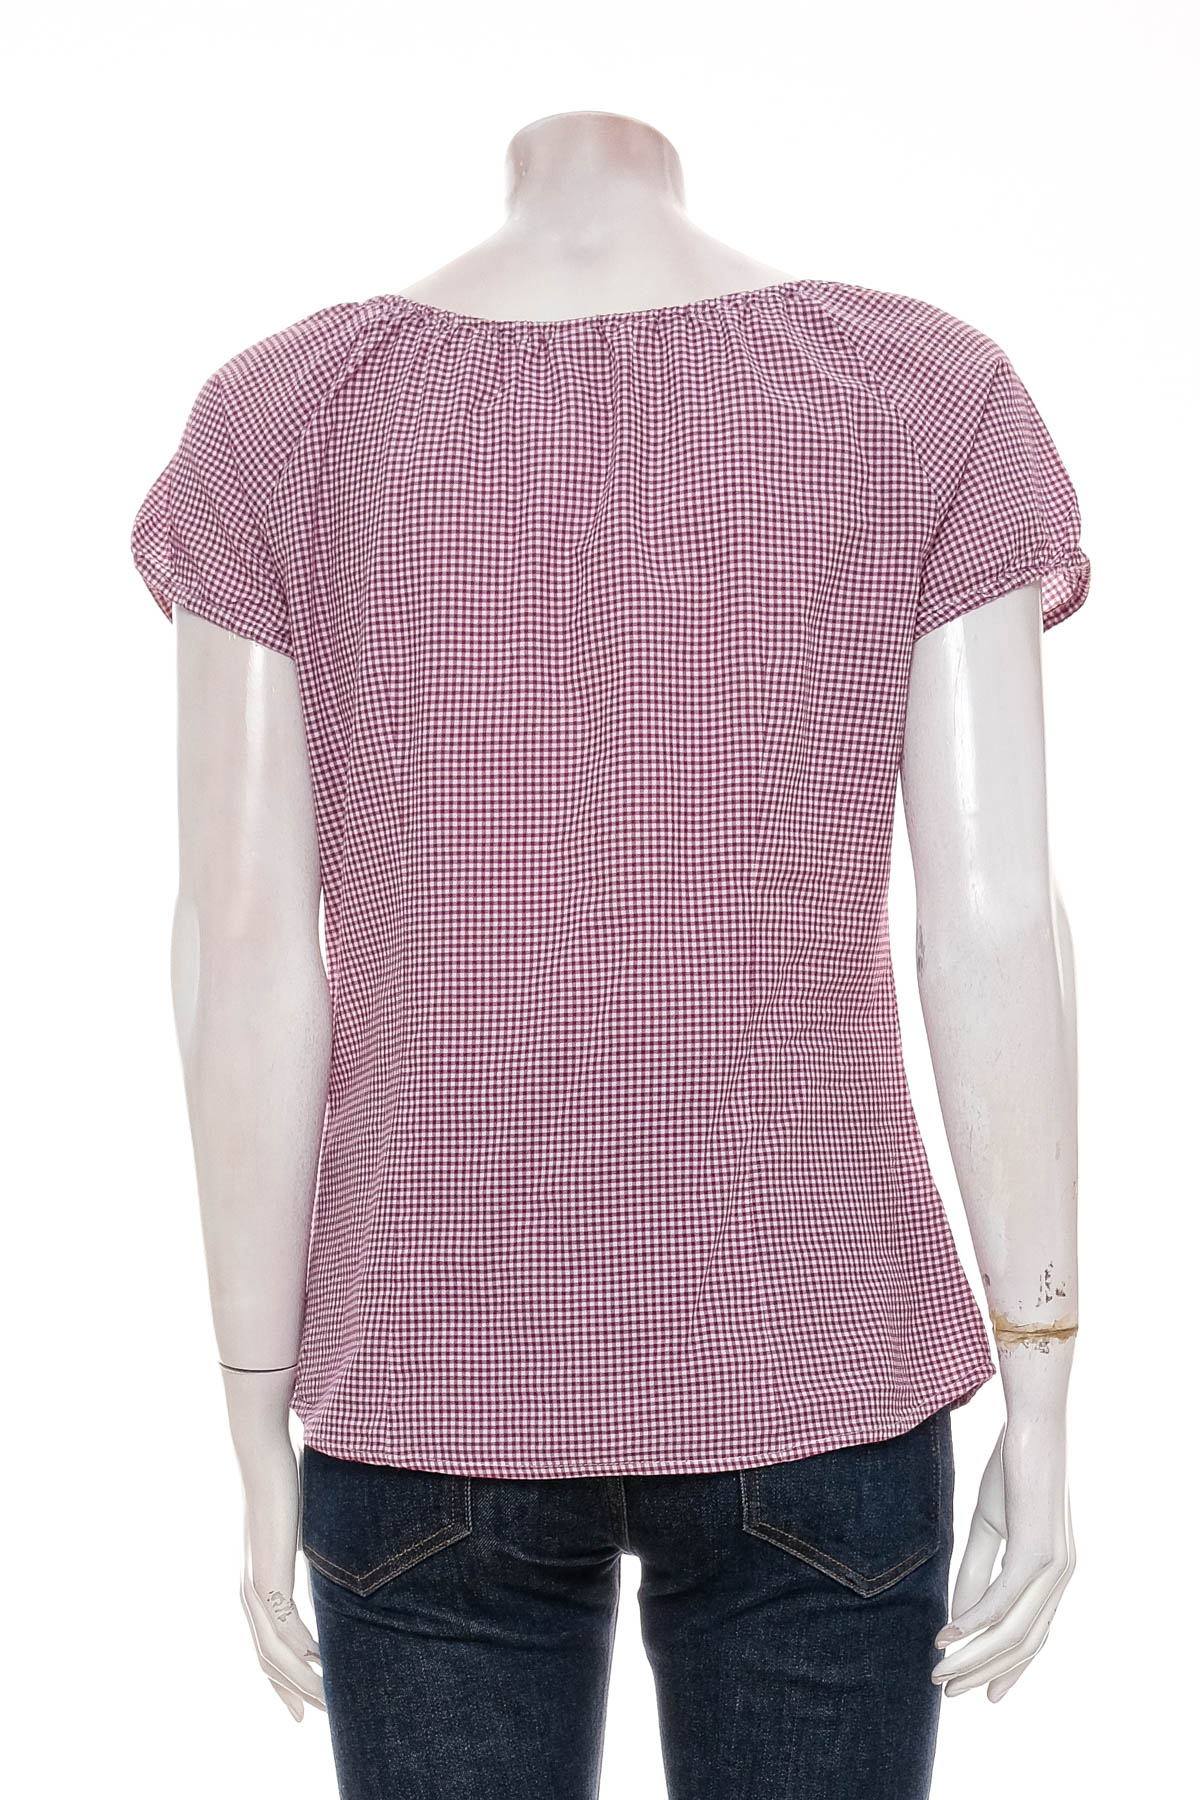 Women's shirt - S.Oliver - 1